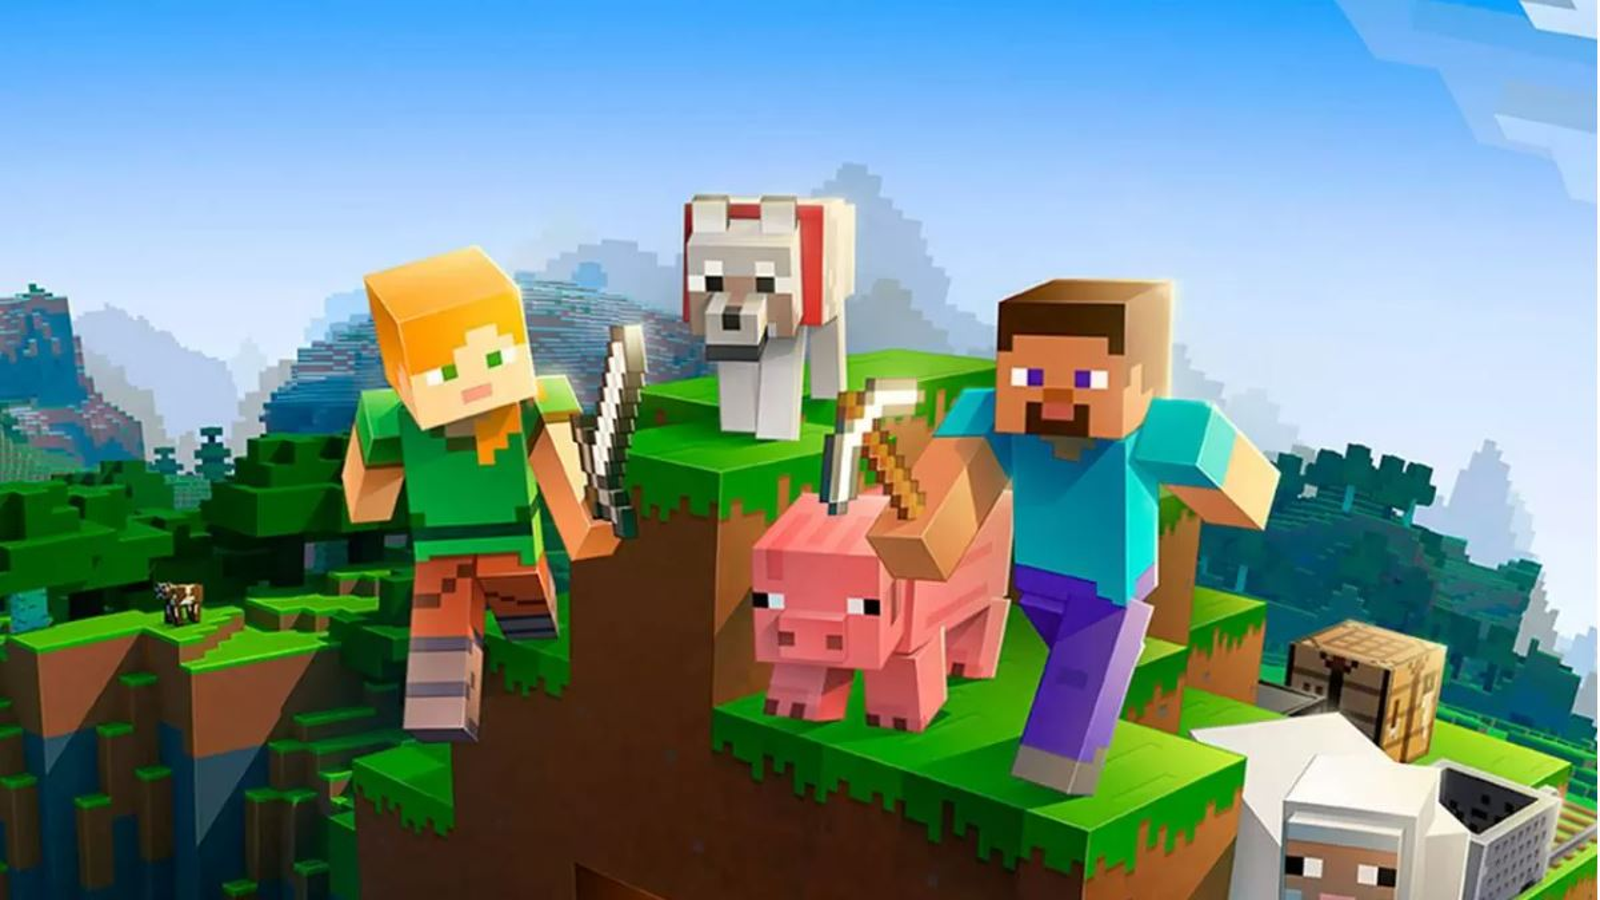 Minecraft ultrapassa 200 milhões de cópias vendidas